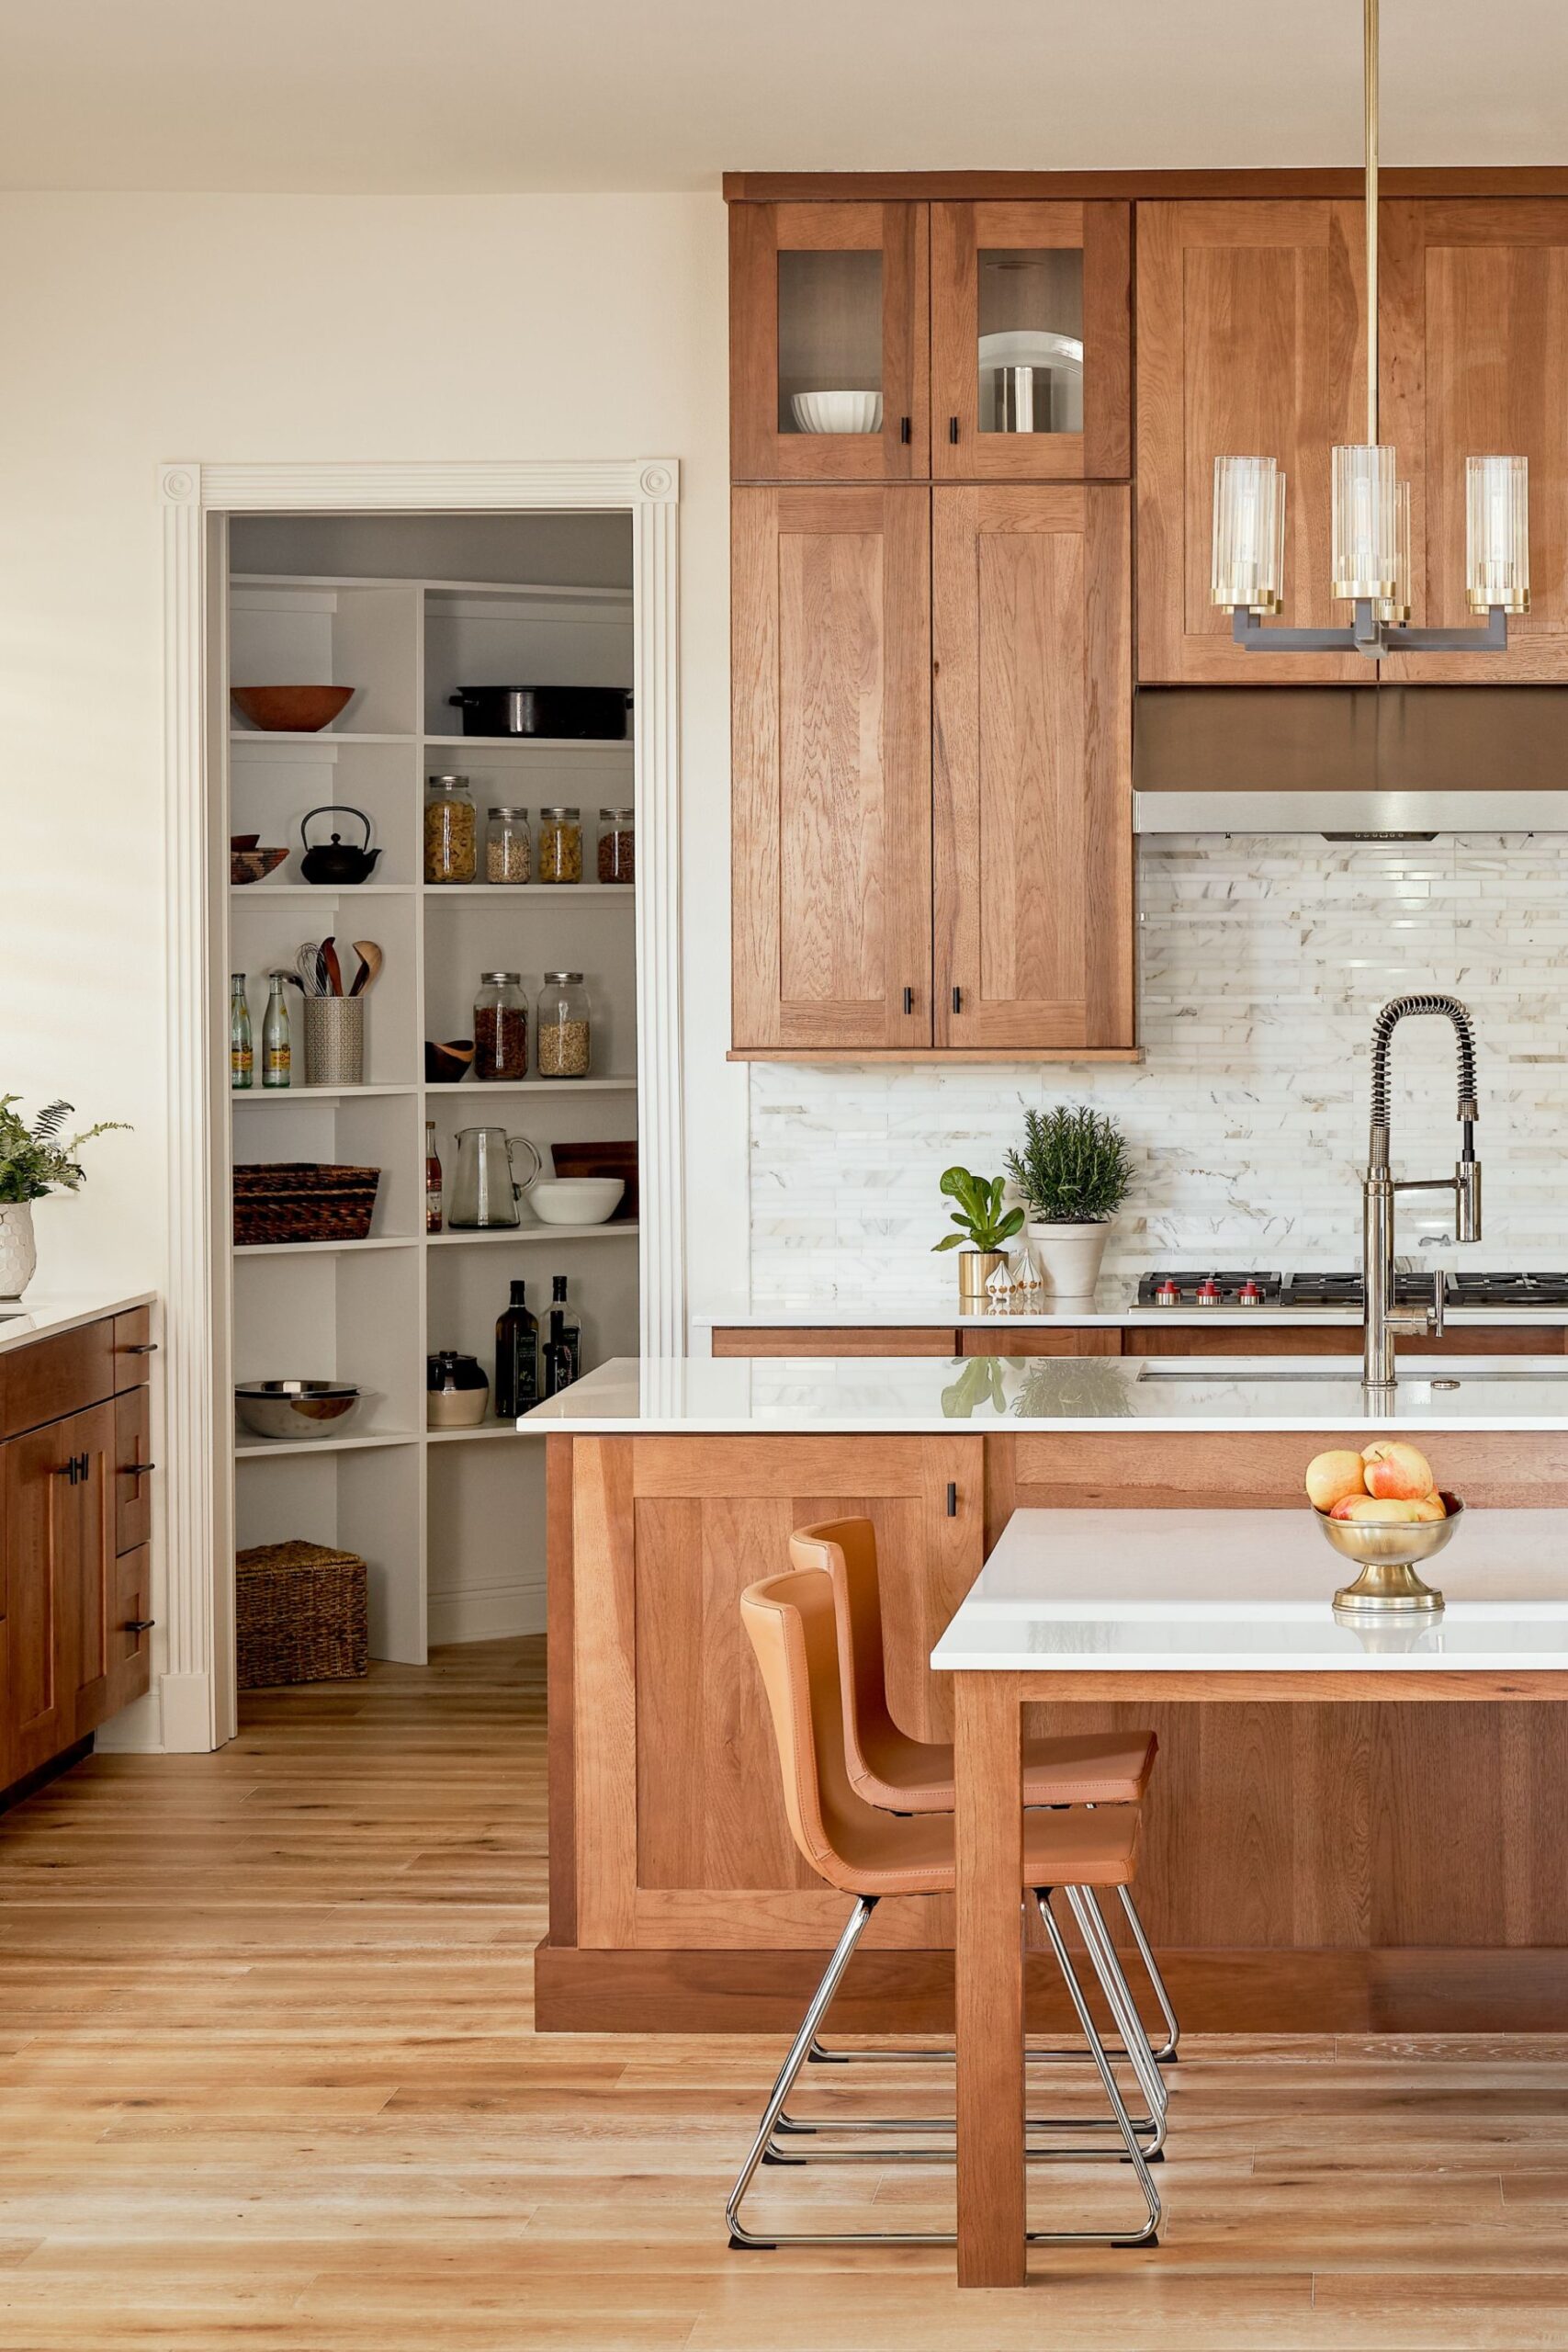 9 Light Wood Kitchens ideas  light wood kitchens, wood kitchen  - light wood kitchen cabinets